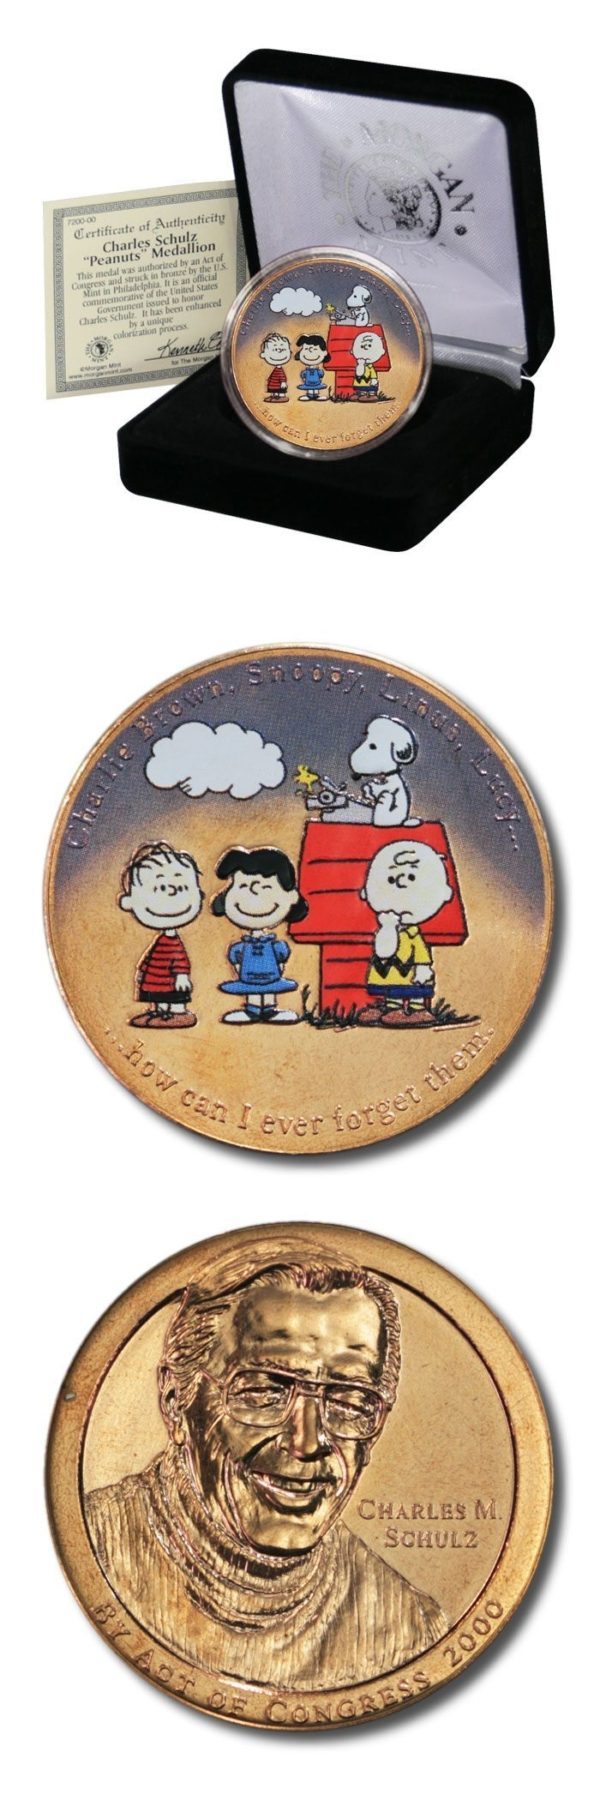 USA - Charles Schultz Peanuts Medallion - Official Congressional Medal - 2000 - Box & COA